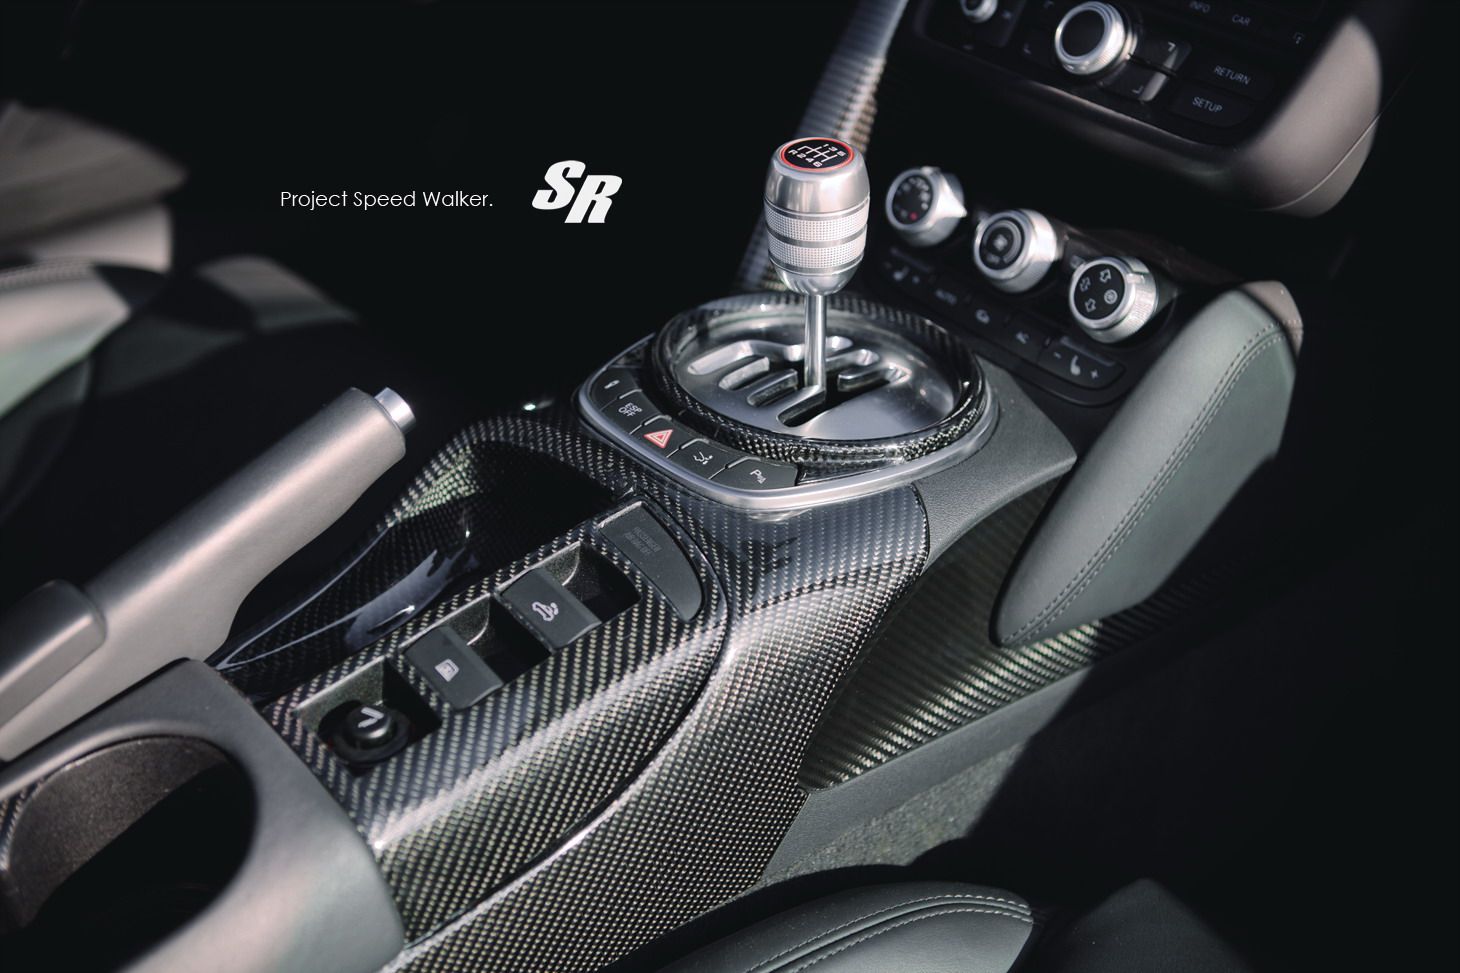 2013 Audi R8 Project Speed Walker by SR Auto Group